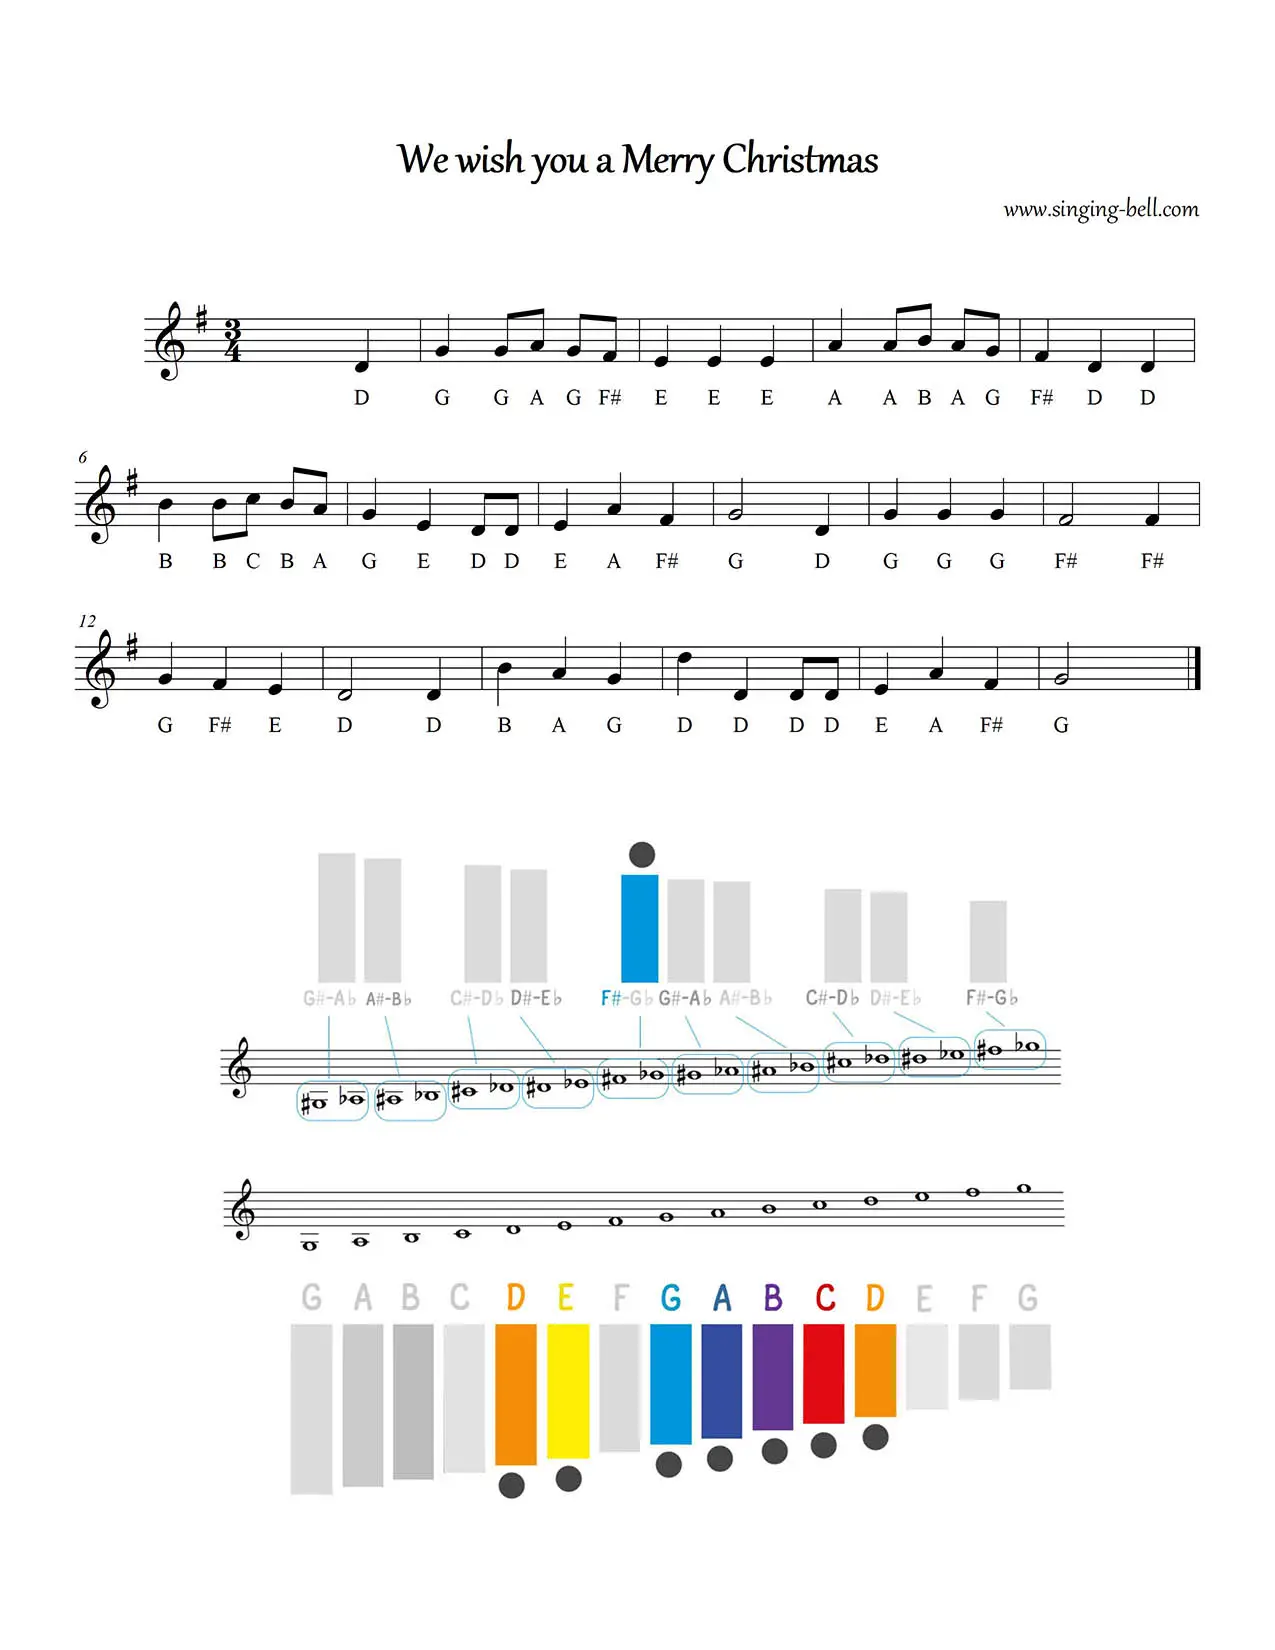 We wish you a merry christmas free glockenspiel sheet music notes chart pdf